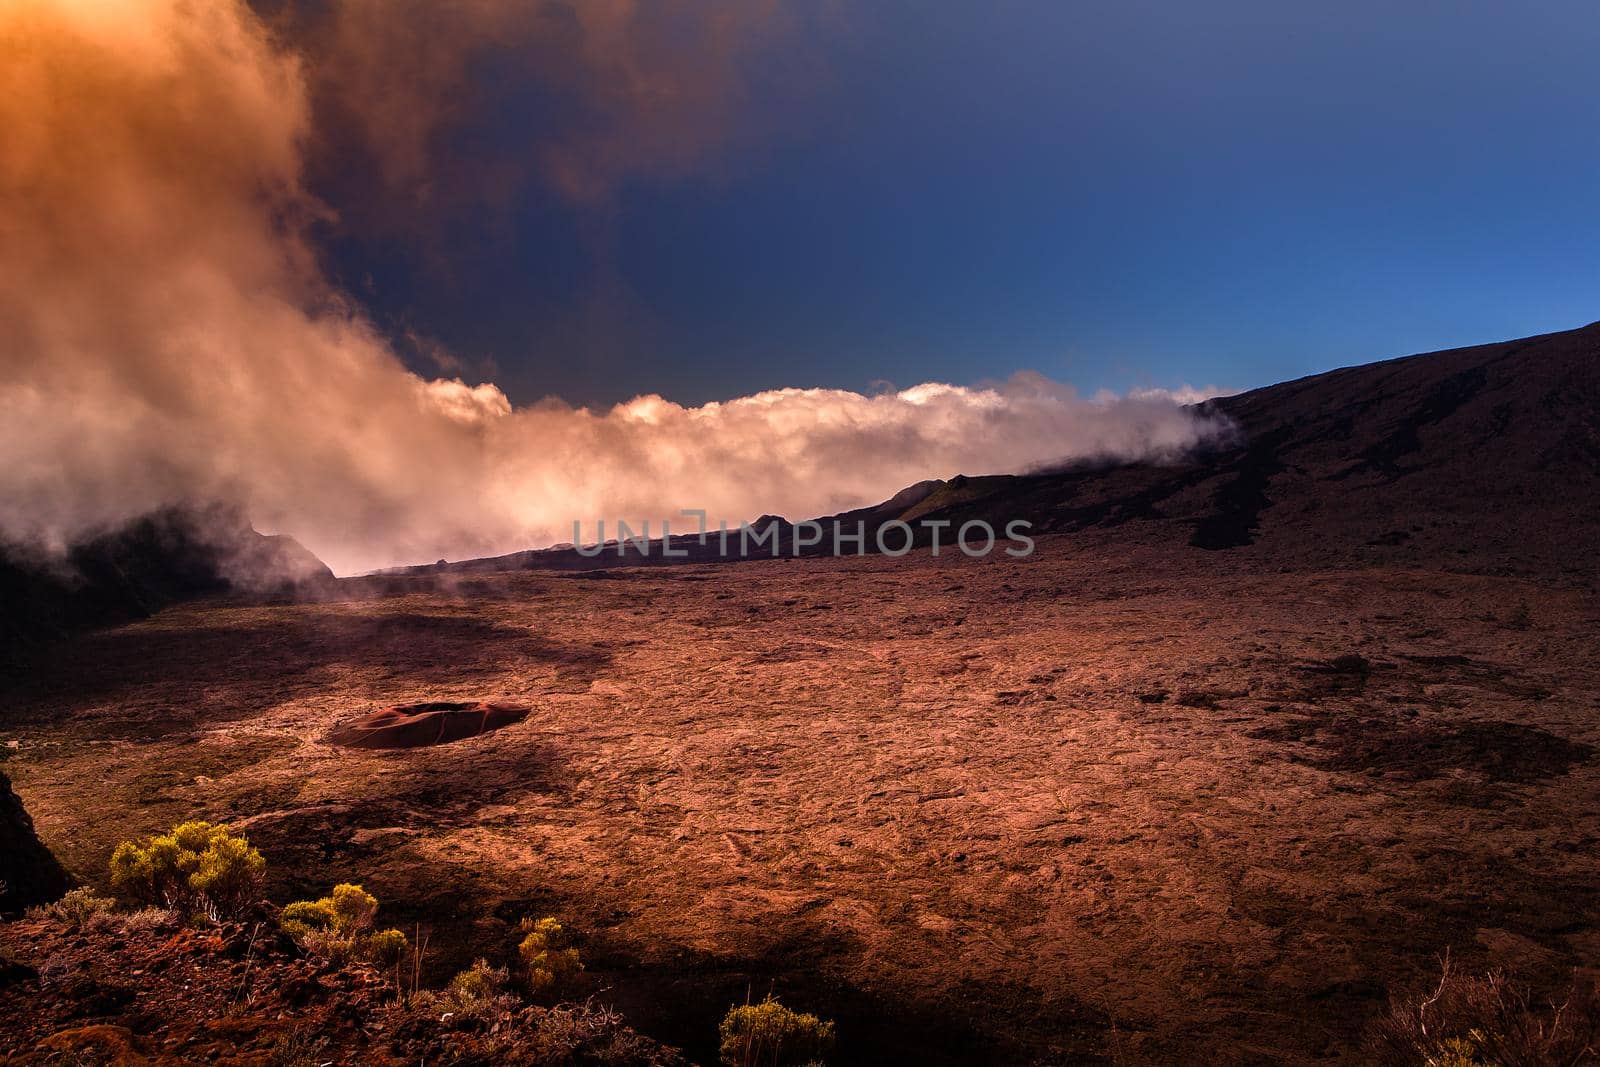 Piton de la Fournaise volcano, Reunion island, France by photogolfer